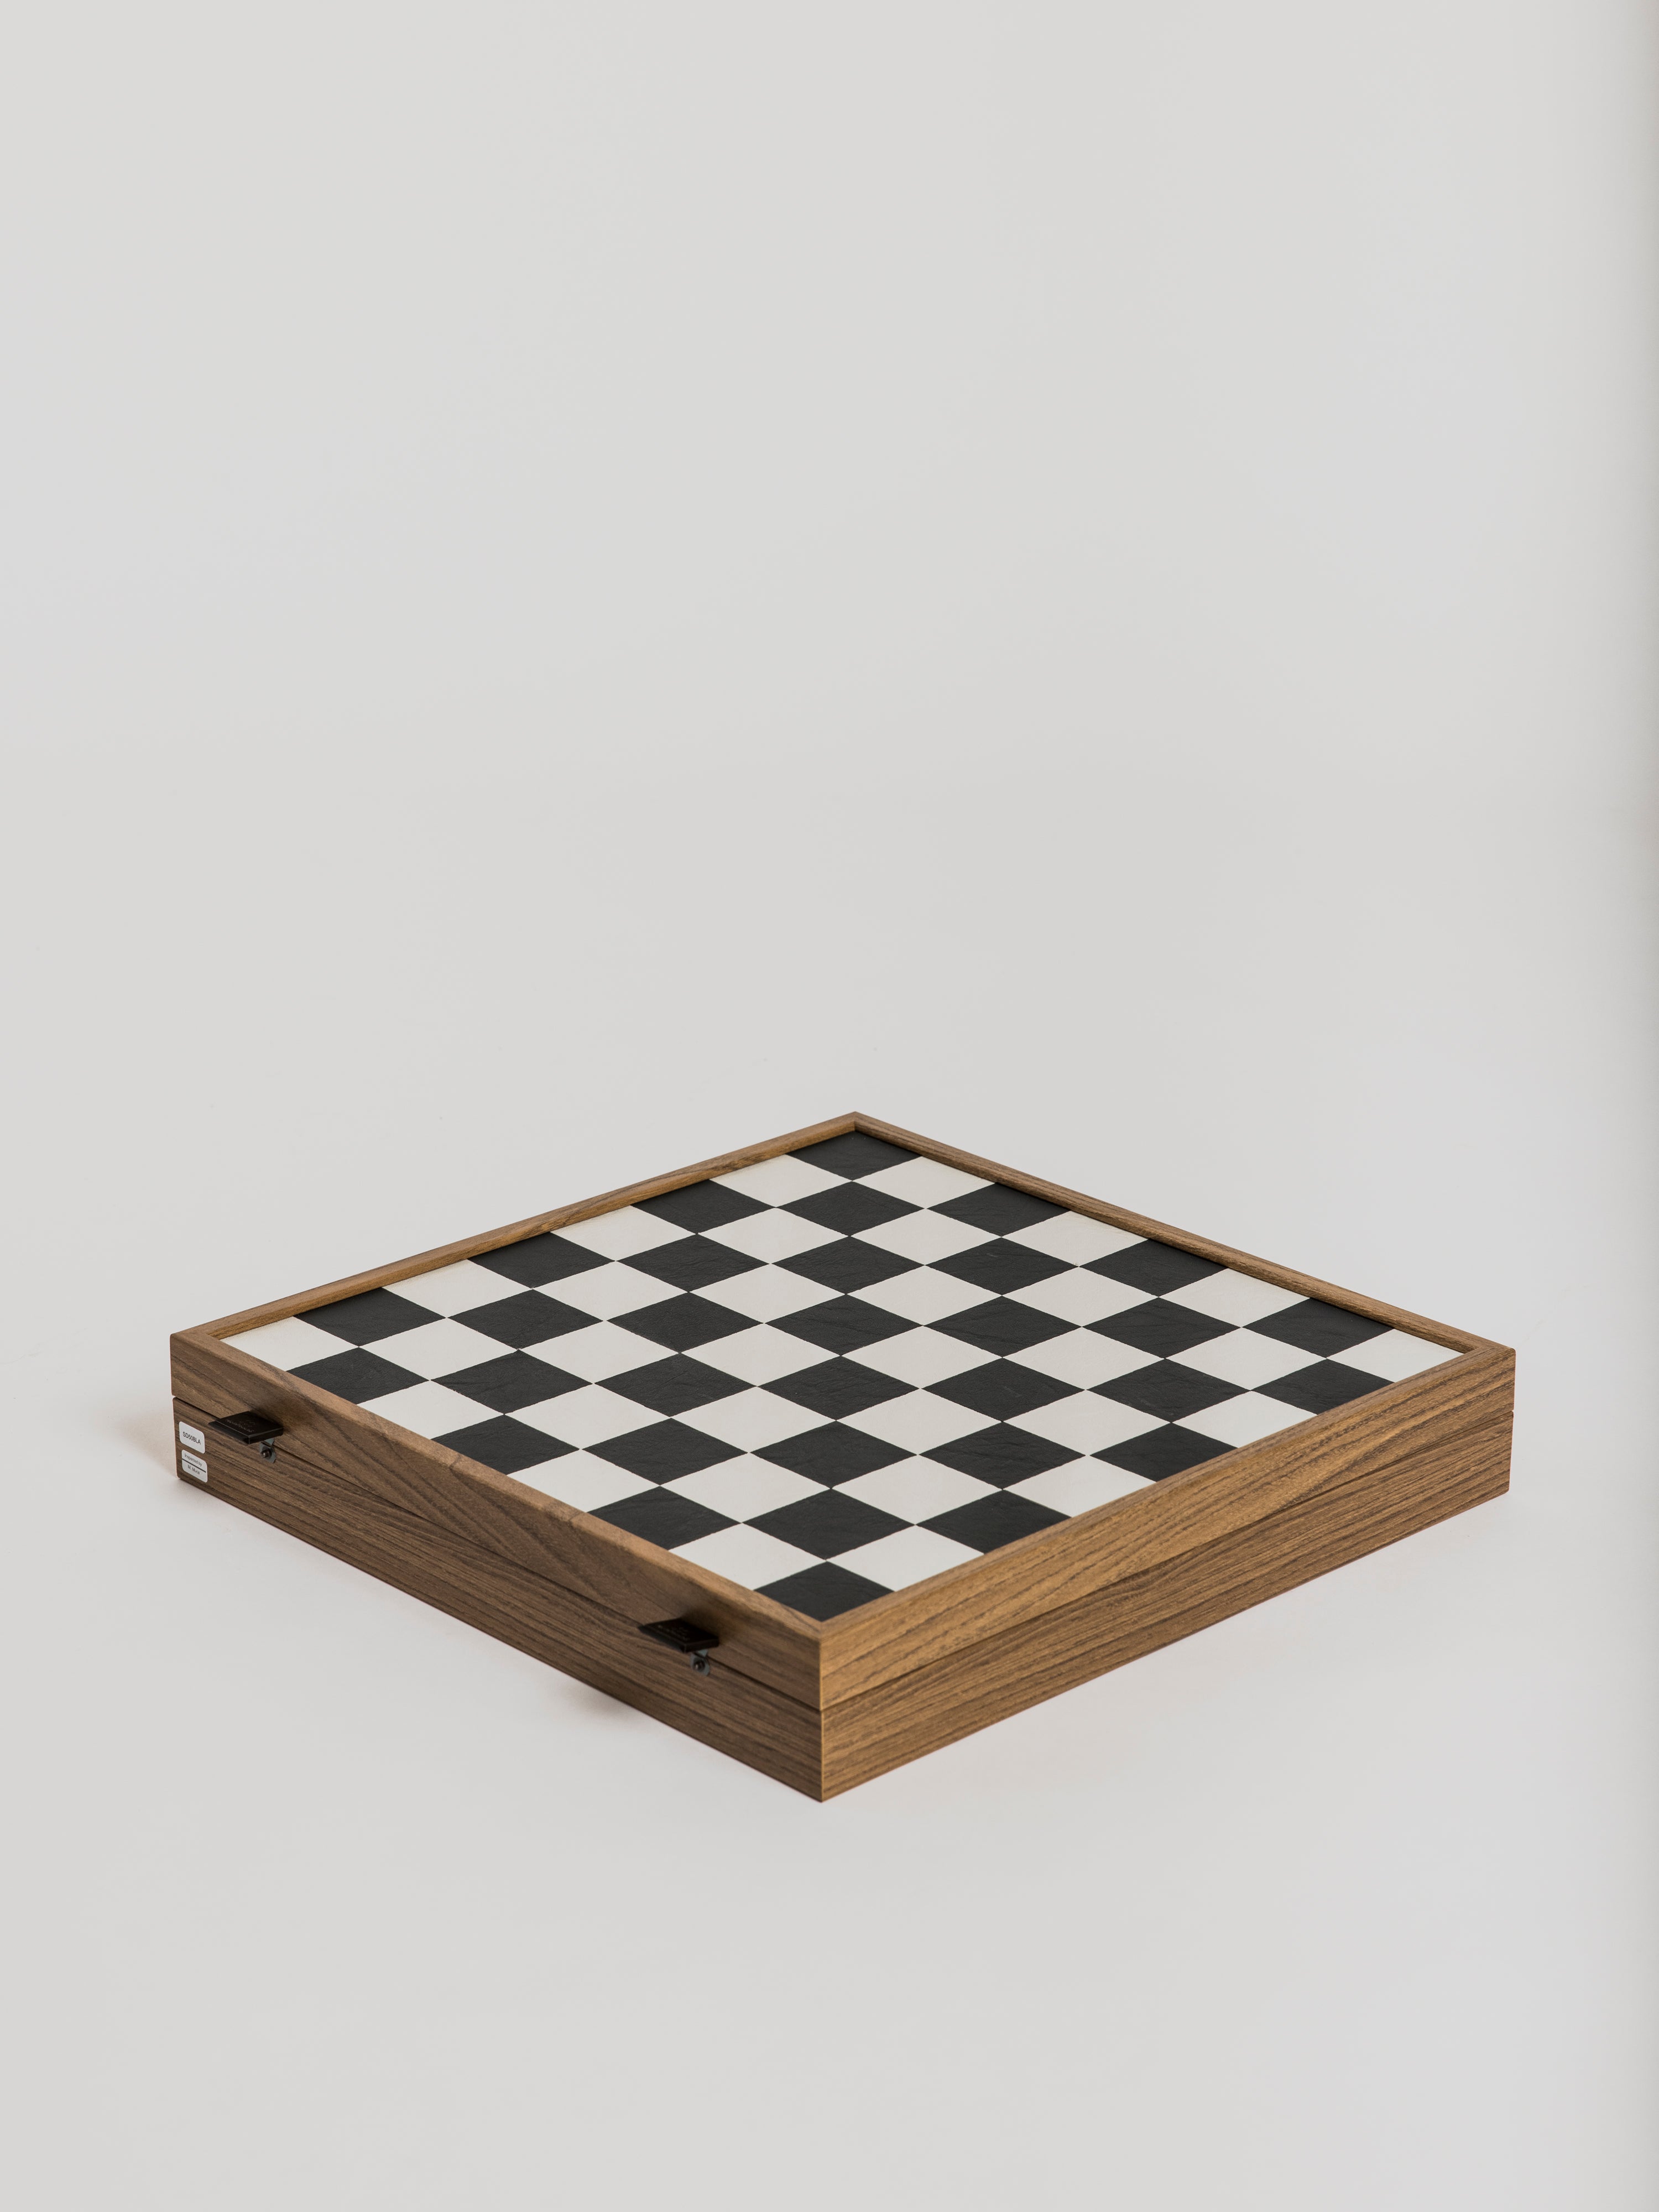 Chessboard - Back &amp; White Letherette - Cigale et Fourmi